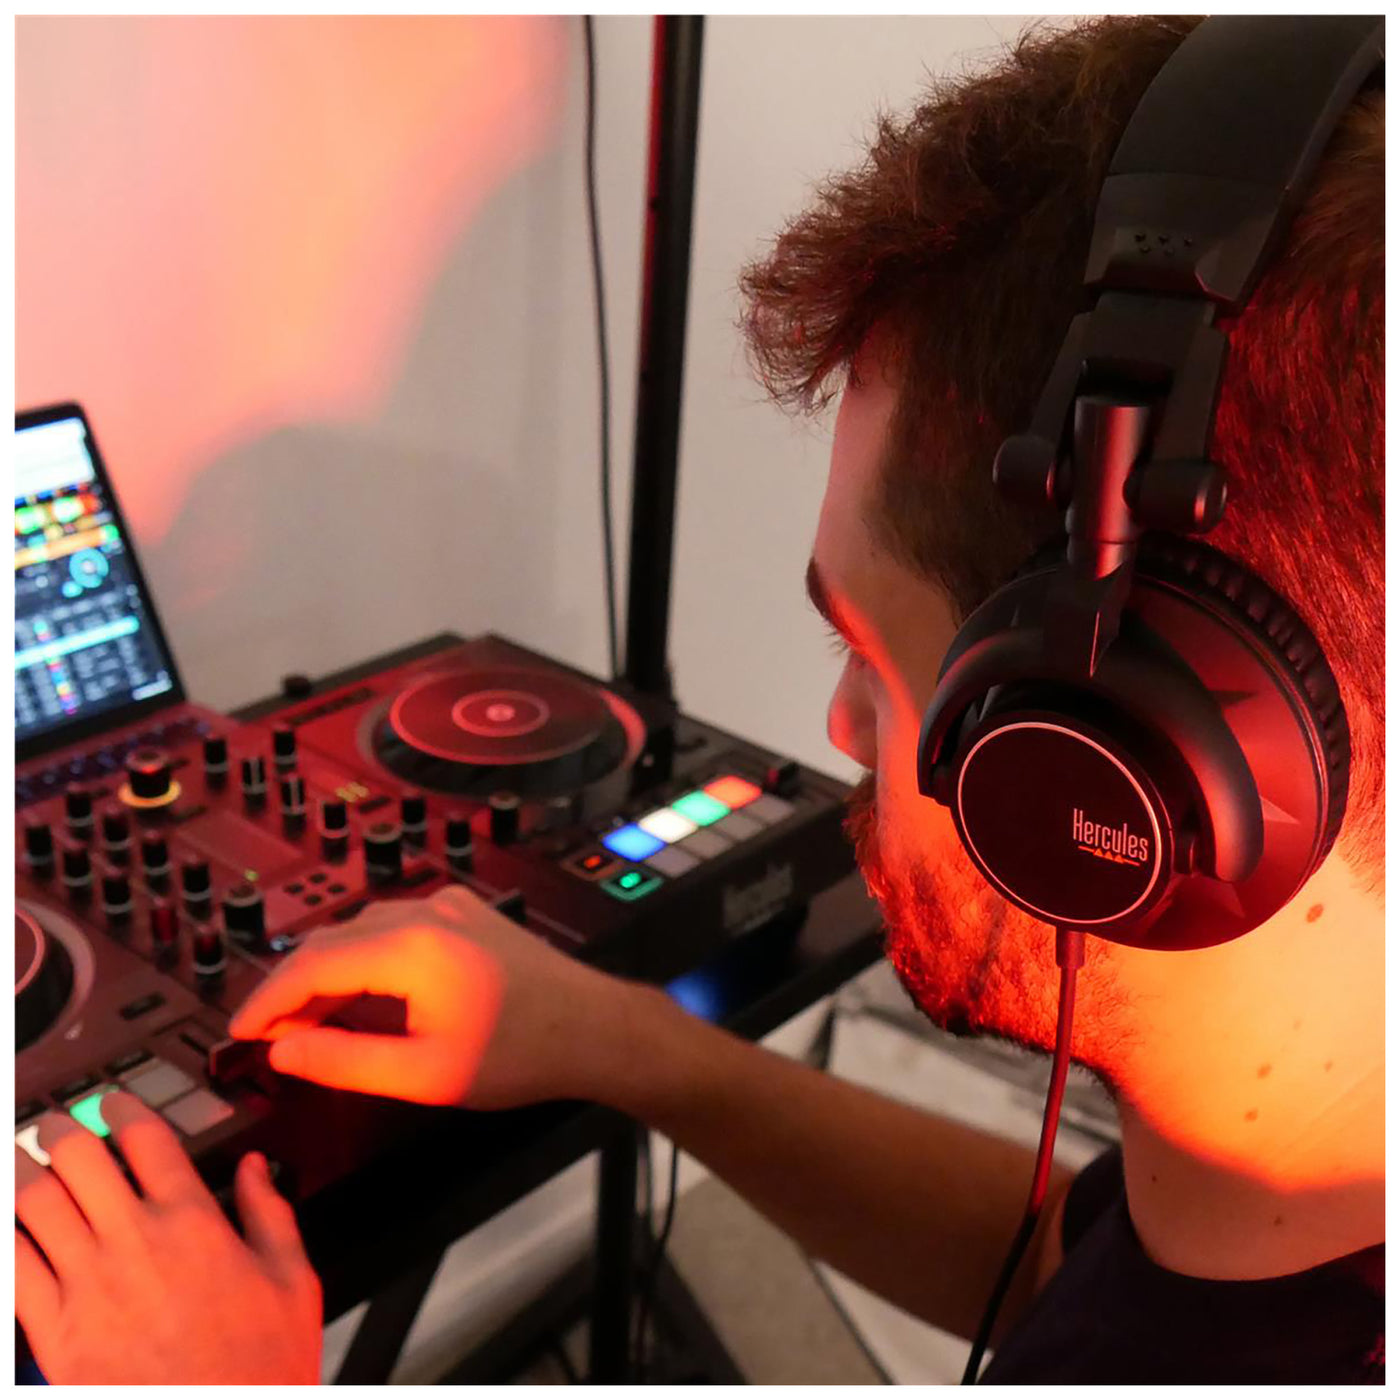 Hercules DJ HDP DJ60 Headphones